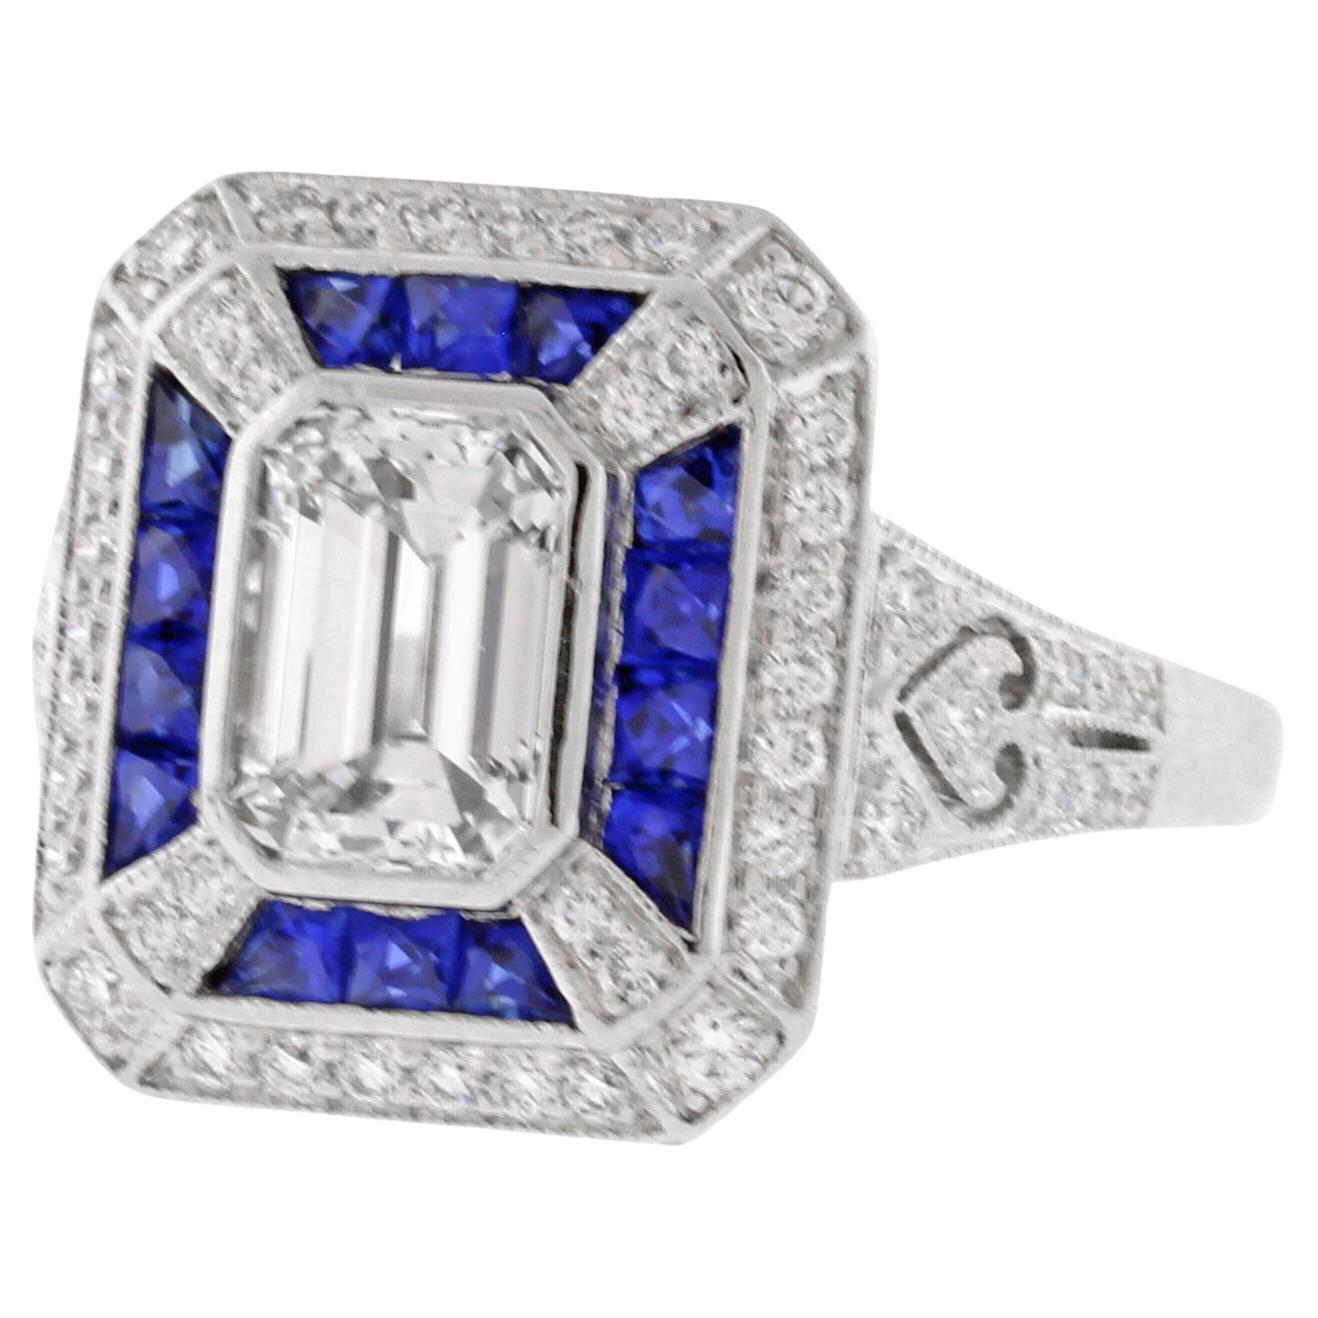 Art Deco Style Emerald Cut Diamond and Sapphire Ring